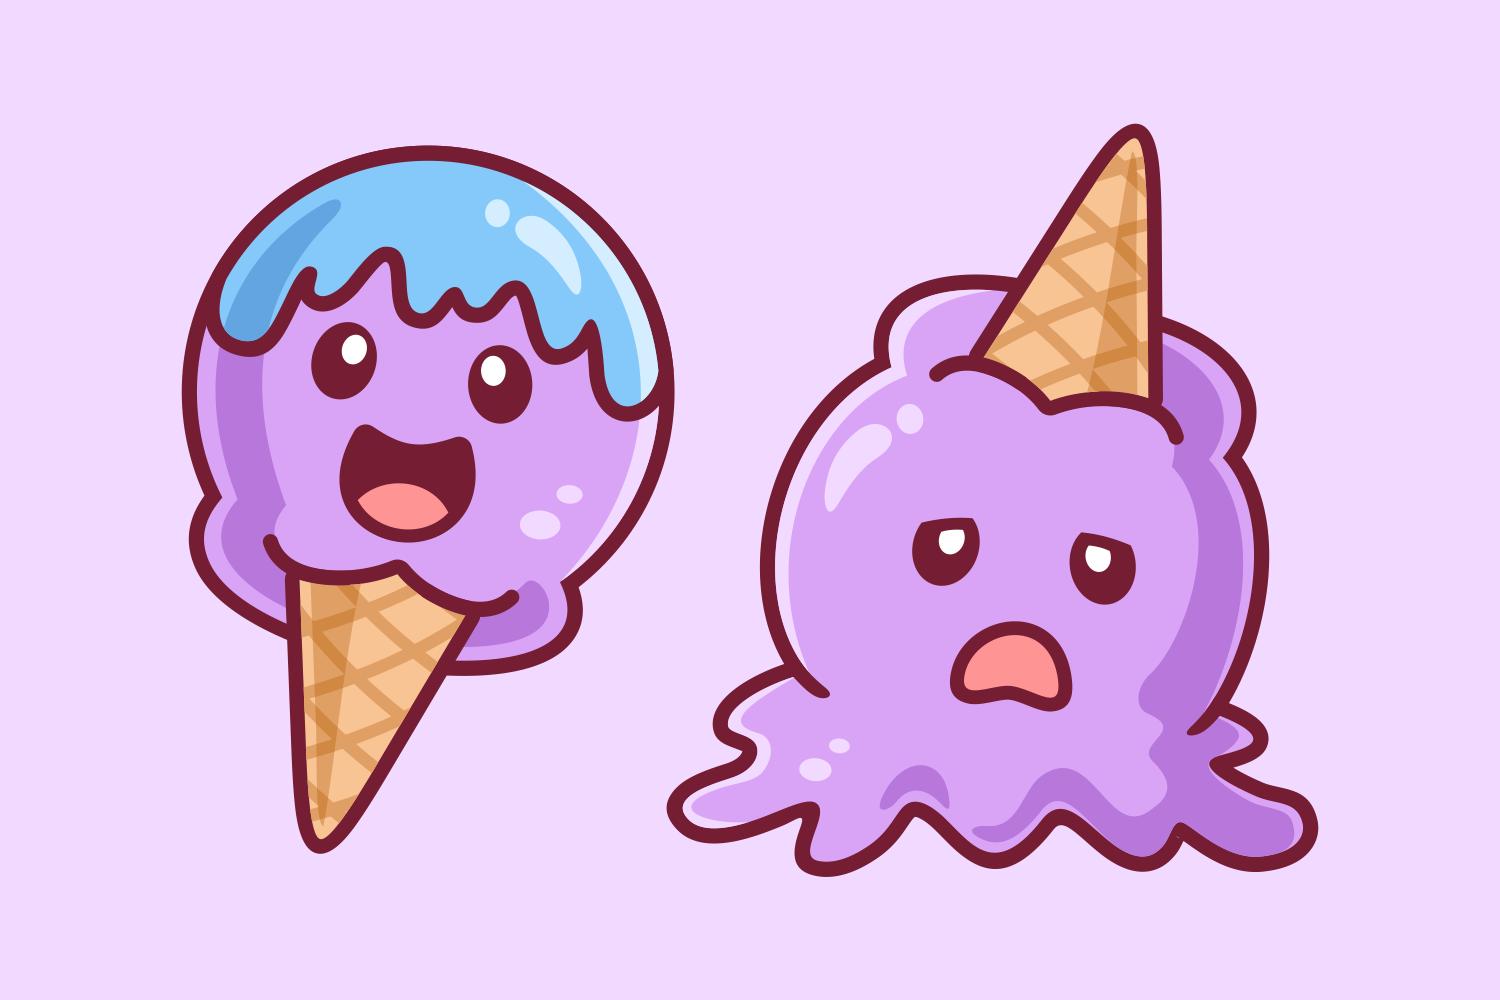 Spilled Cute Ice Cream Cartoon Character